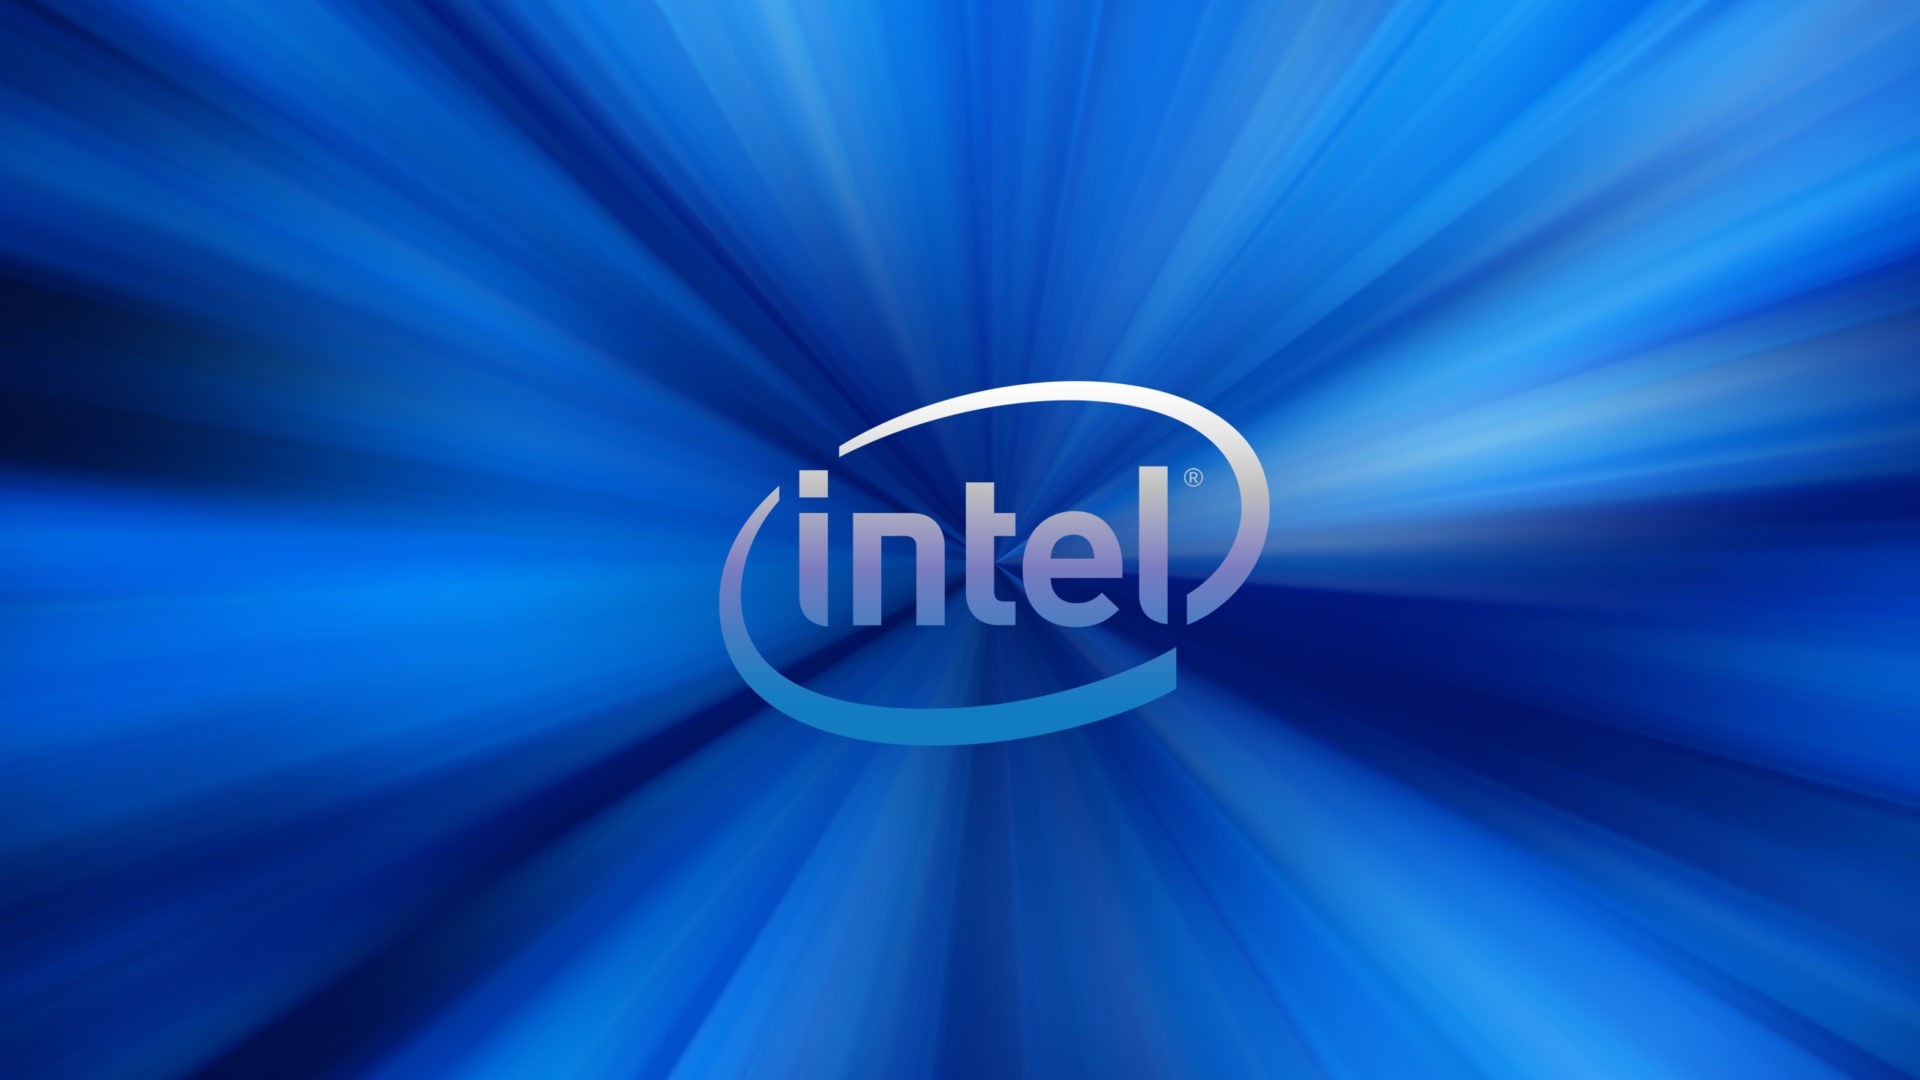 Intel Wallpaper Image